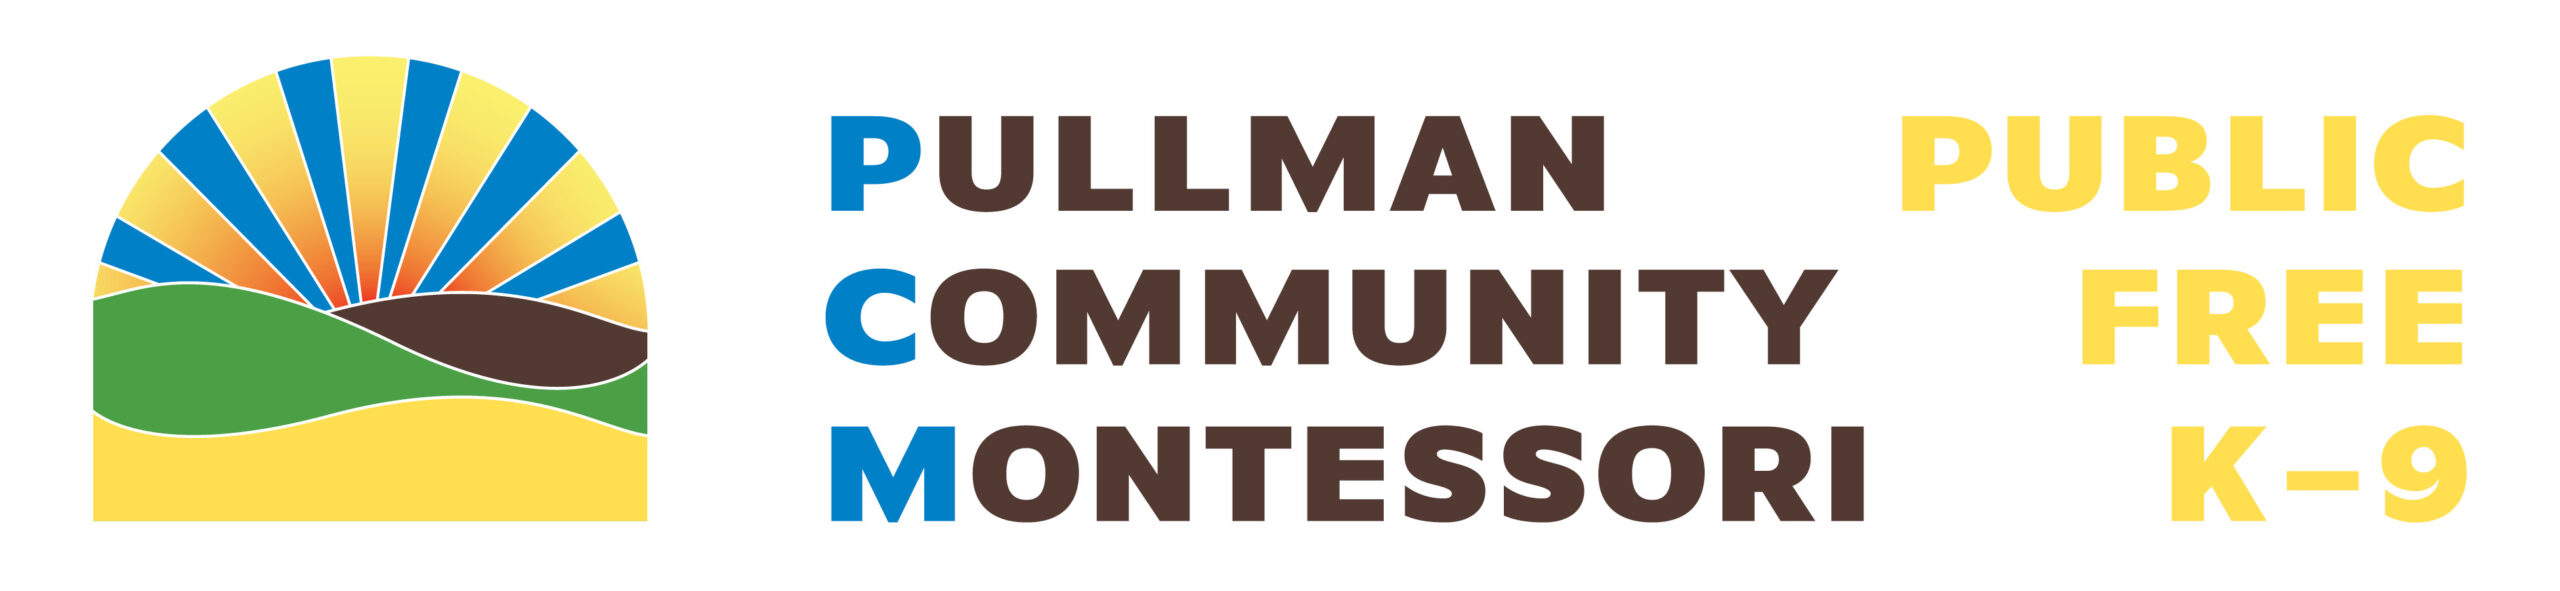 Pullman Community Montessori (PCM)